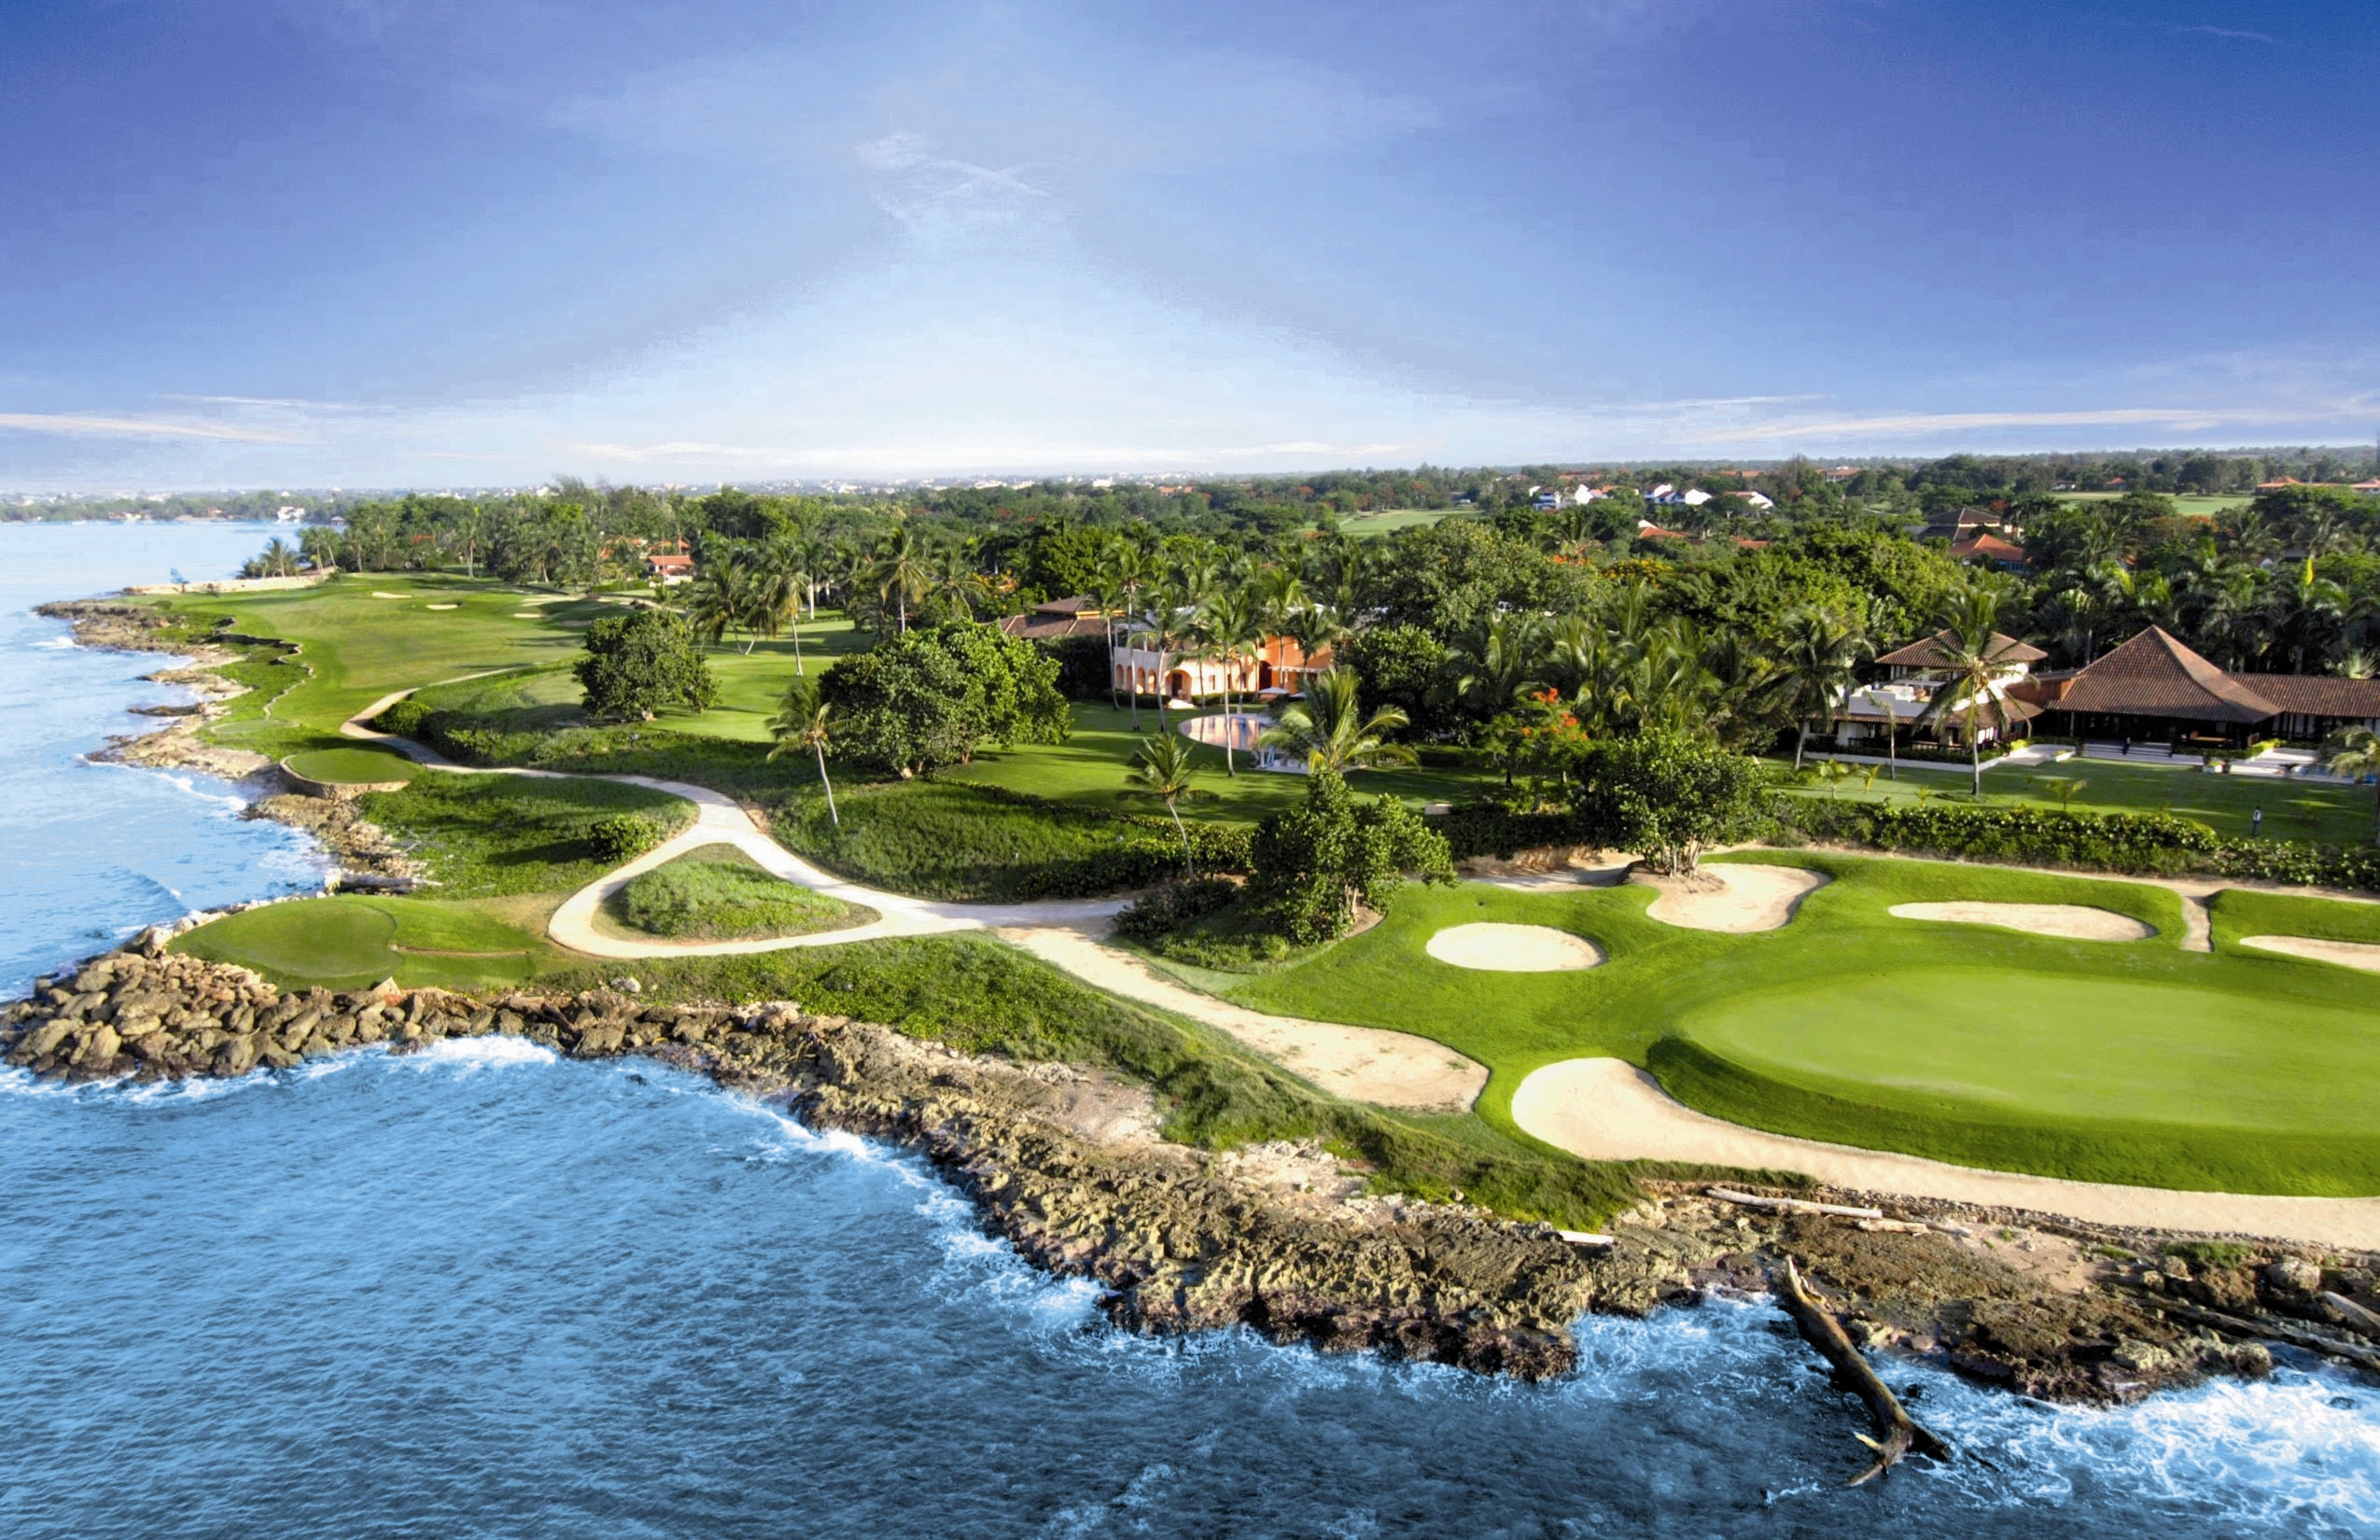 Exclusive LPGA Amateur Golf Association Adventure - Dominican Republic 
Format: 2 Person Best Ball